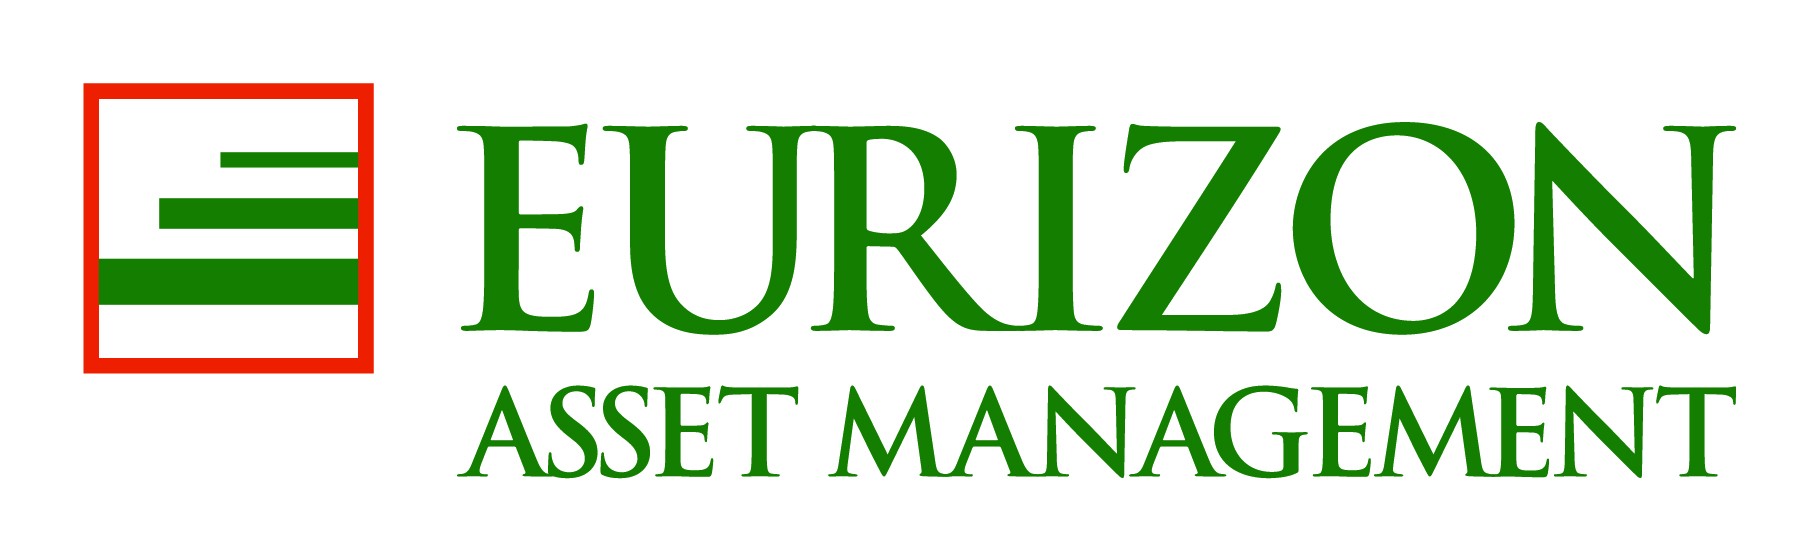 Eurizon Asset Management Slovakia, správ. spol., a.s.